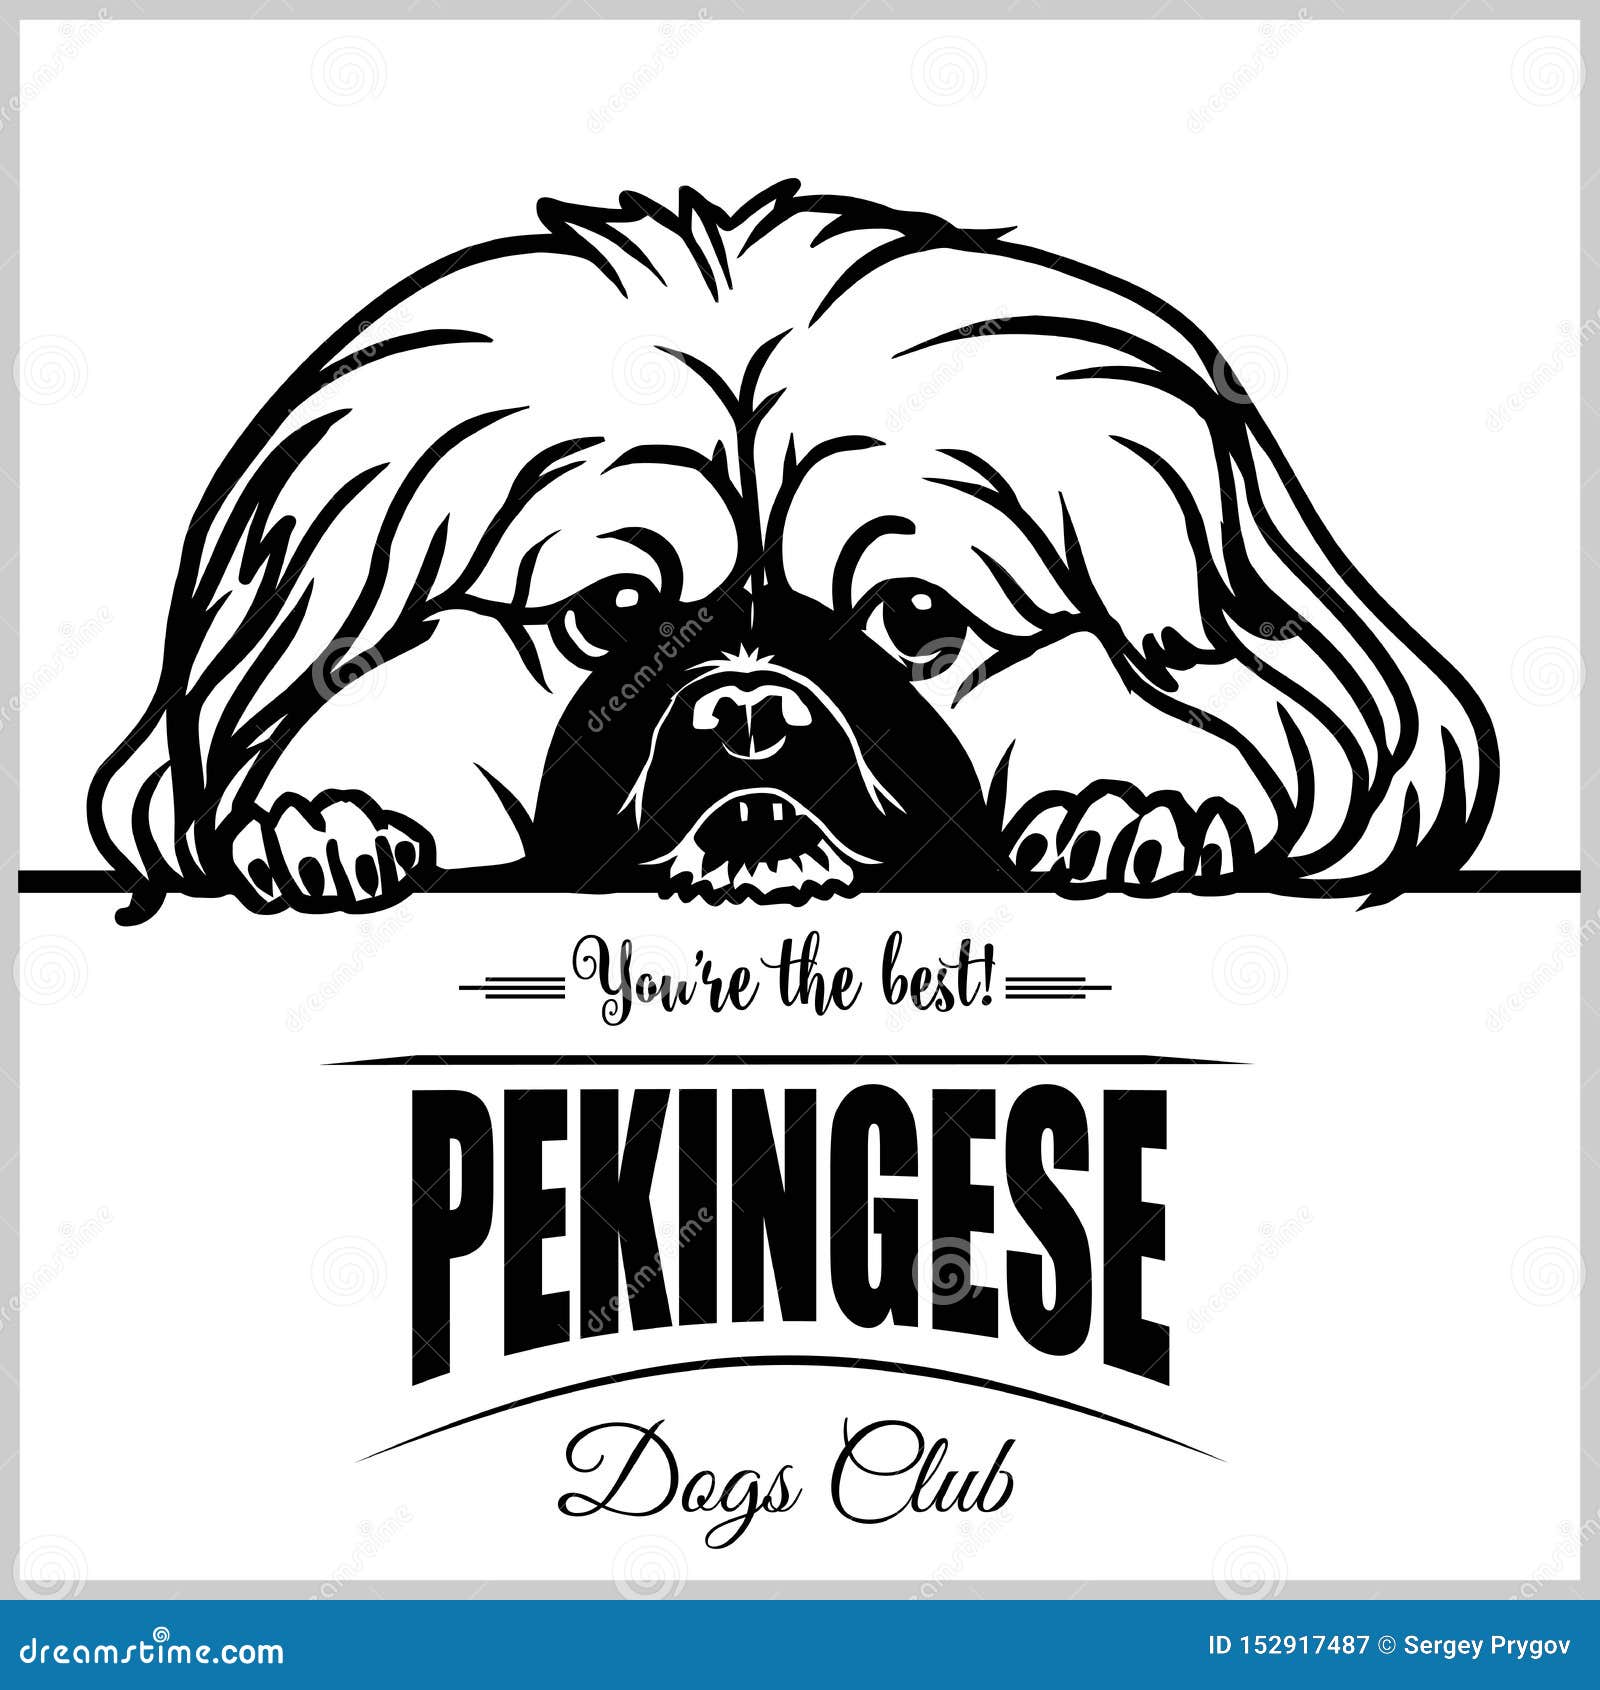 Pekingese - Vector Illustration for T-shirt, Logo and Template Badges